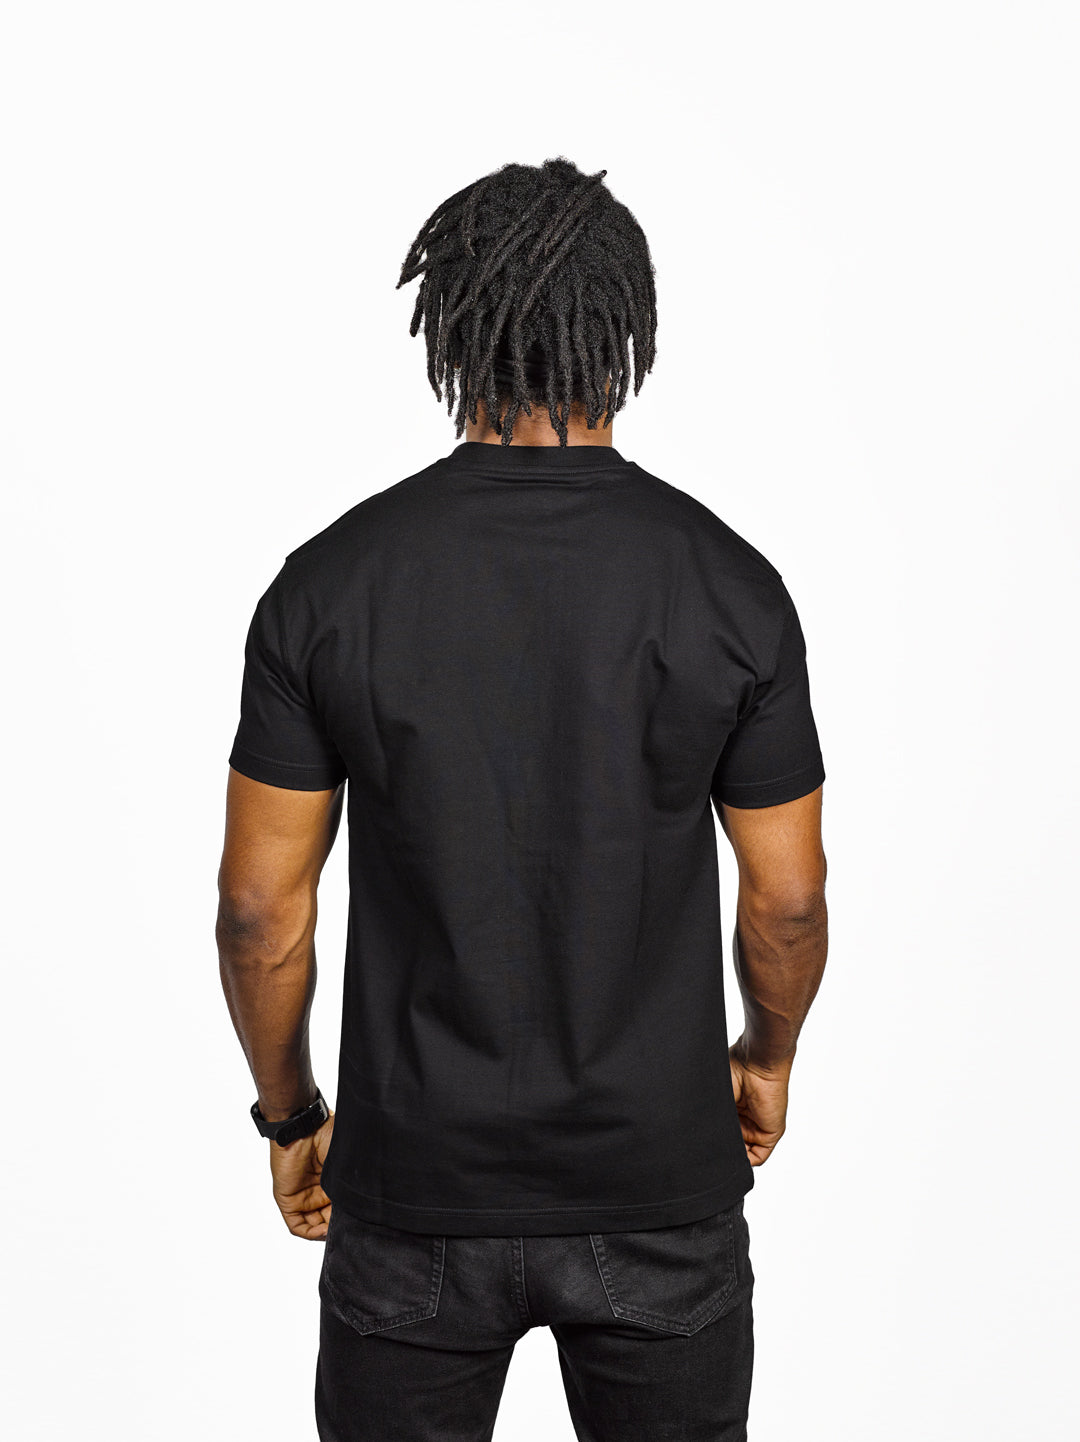 Exetees Plain Regular Round Neck T-Shirt - Black